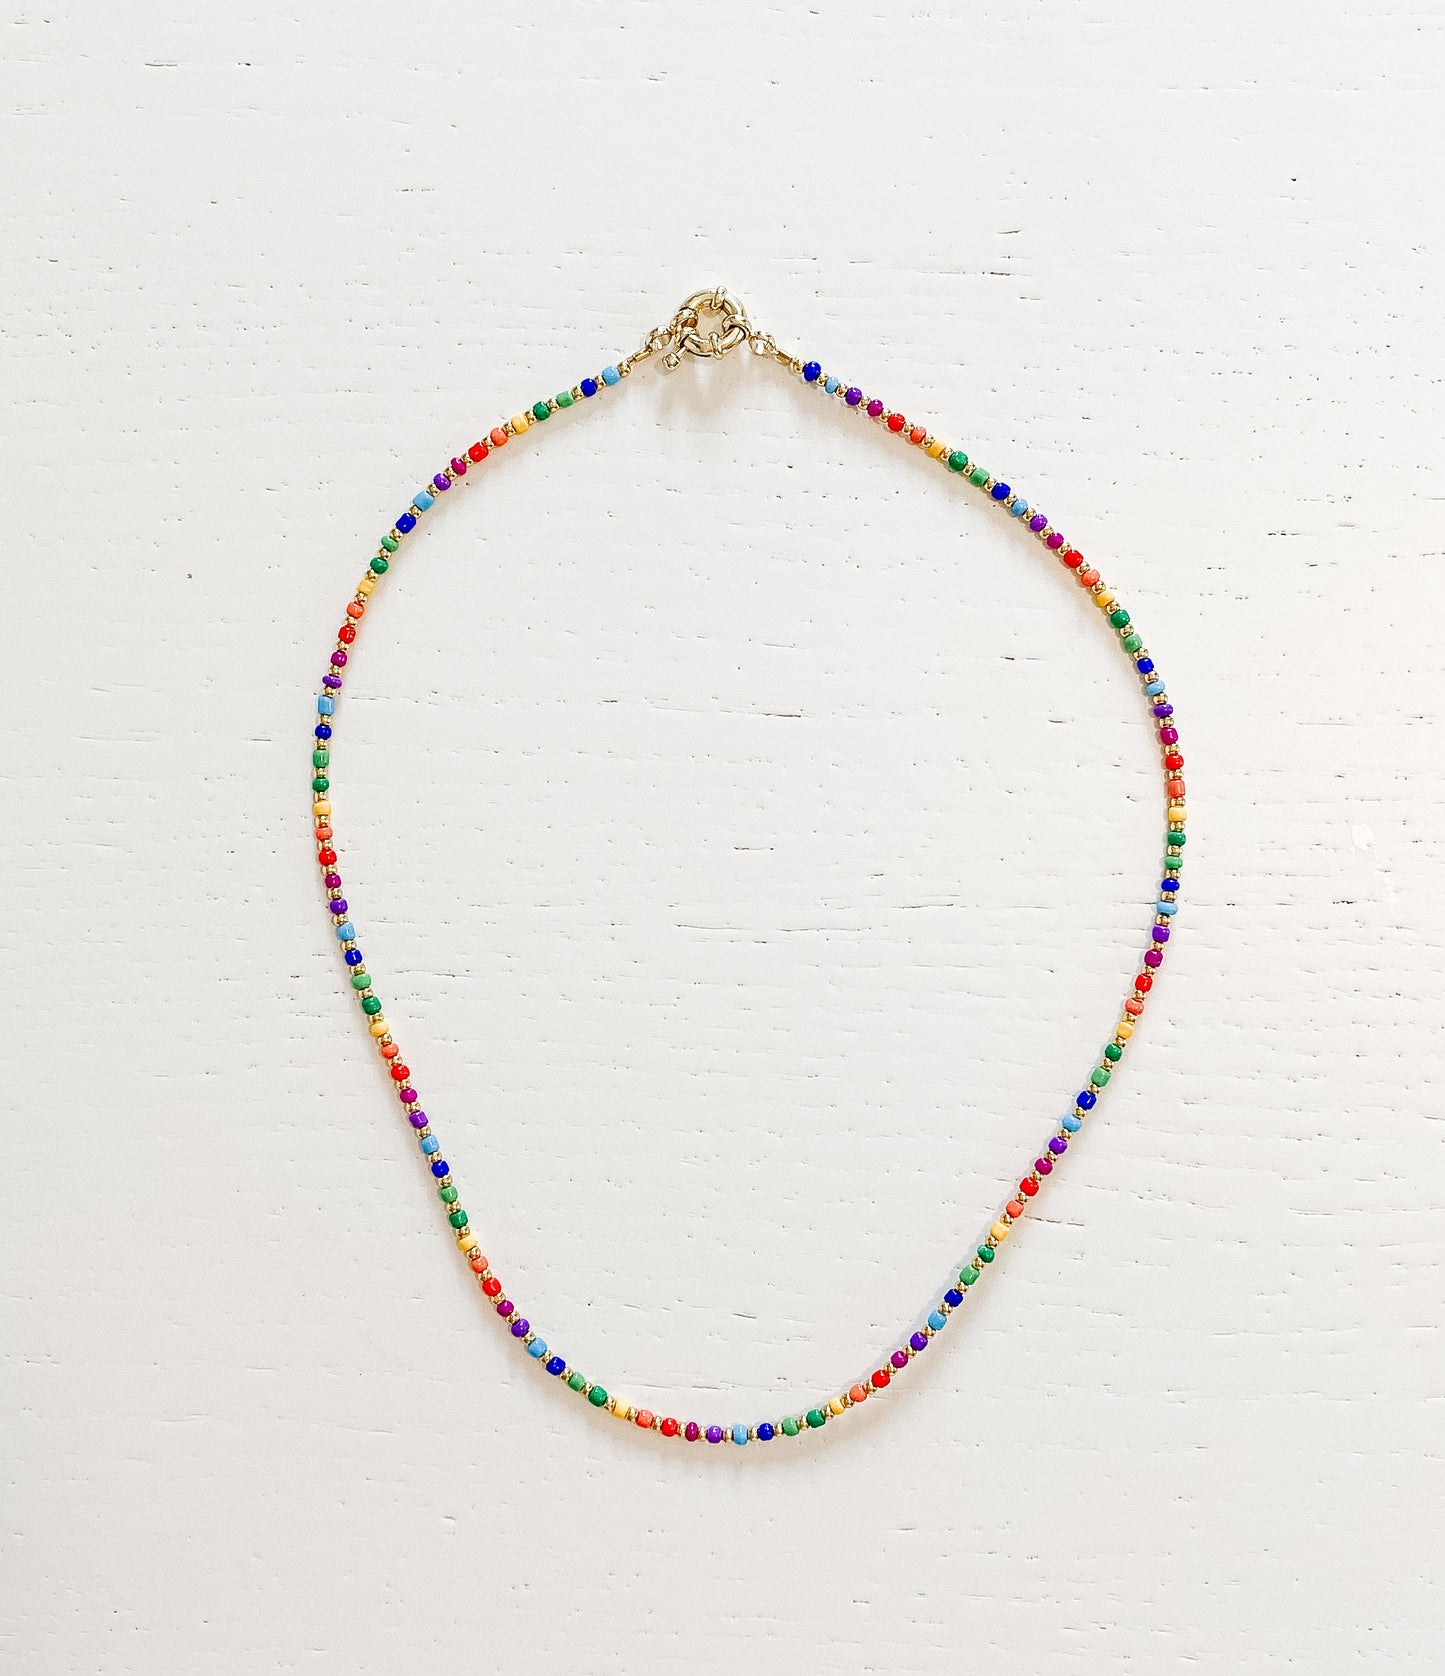 The Rainbow Charm Necklace